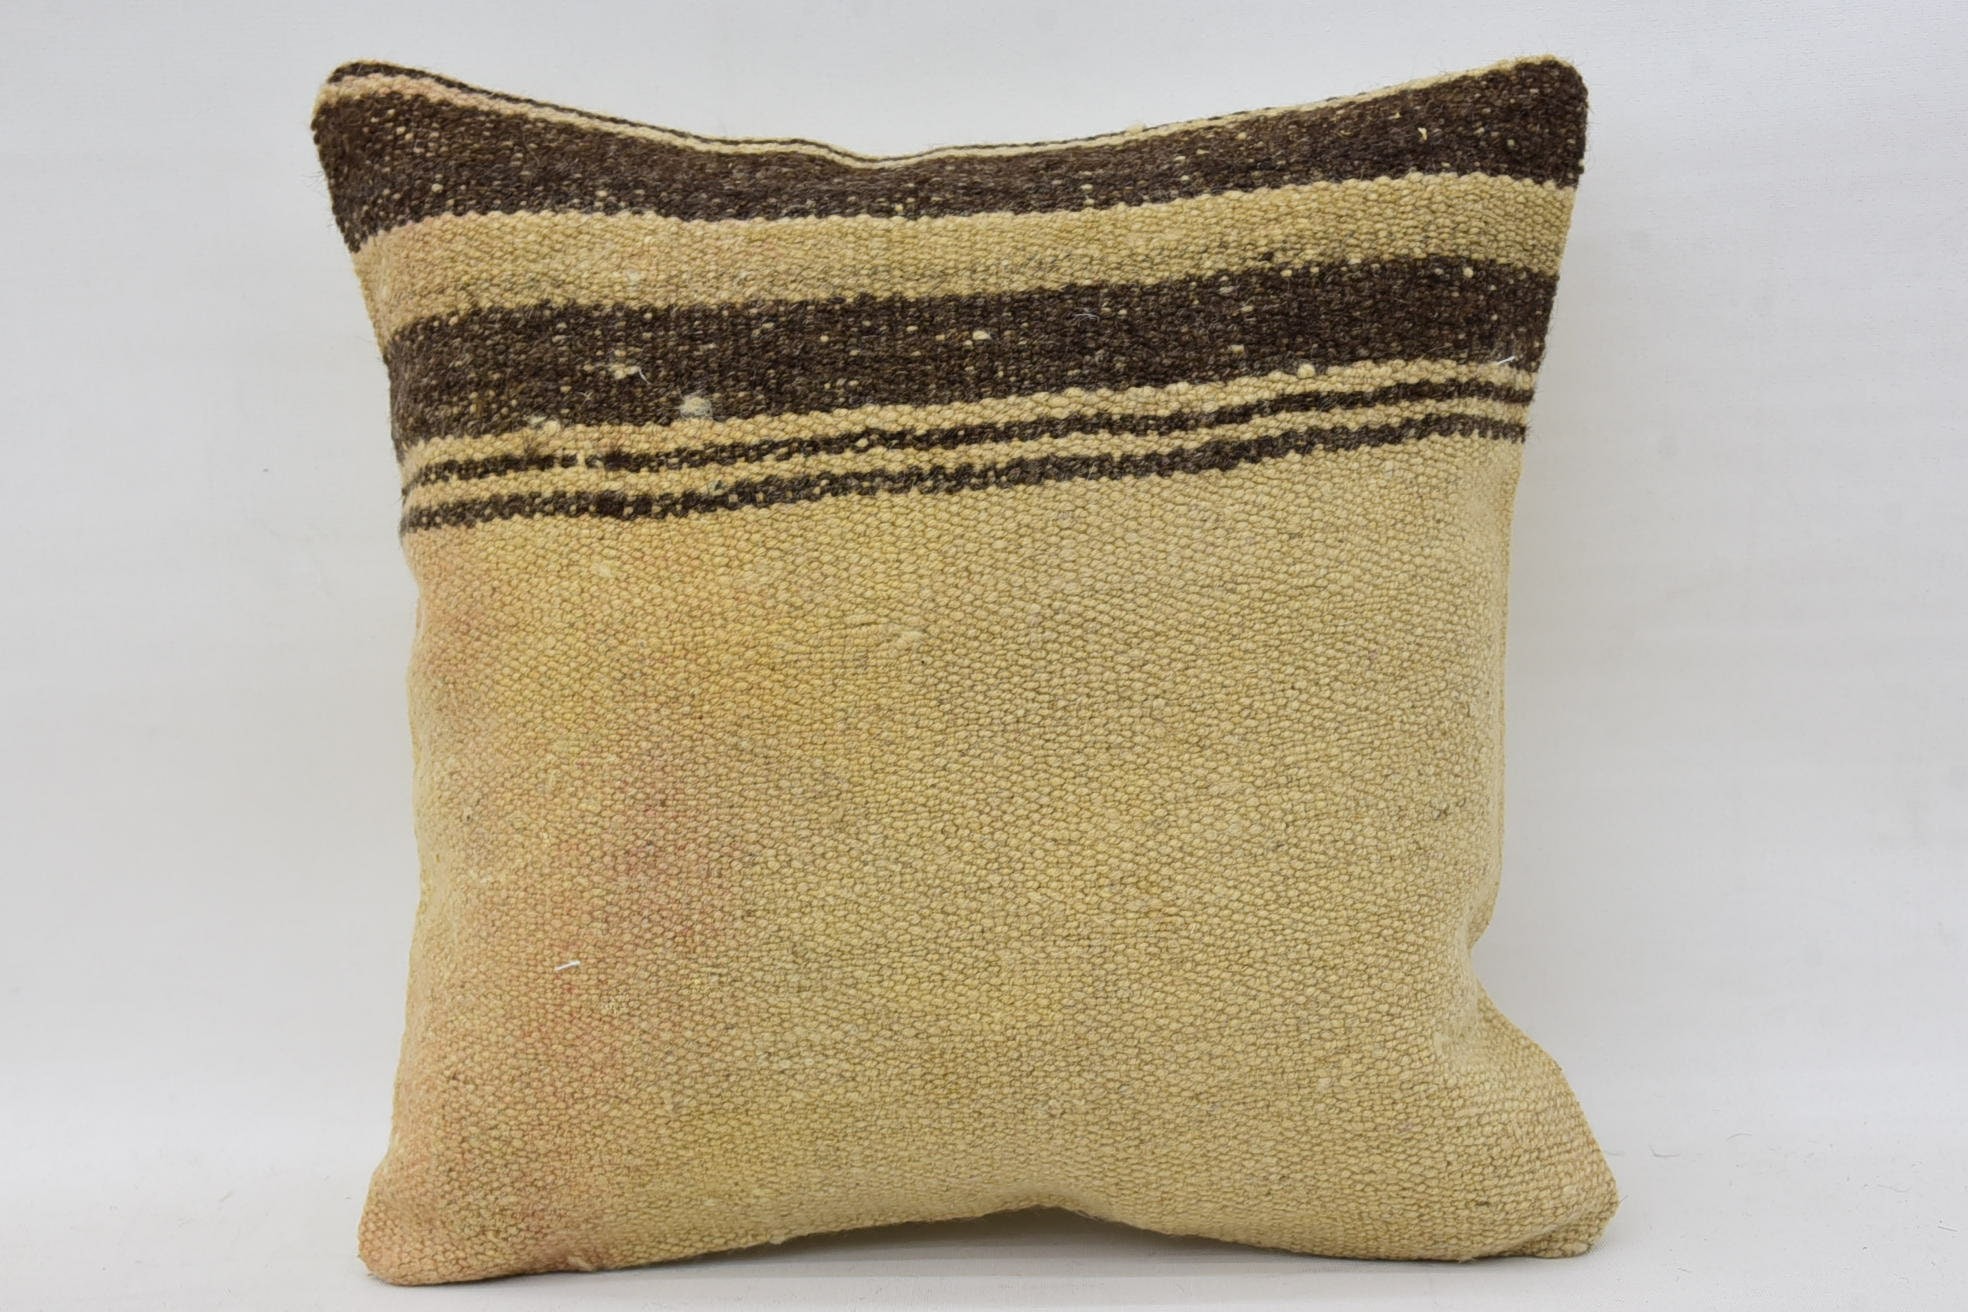 14"x14" Beige Pillow Sham, Vintage Kilim Pillow, Pillow for Couch, Crochet Pattern Pillow, Retro Pillow Cover, Home Decor Pillow